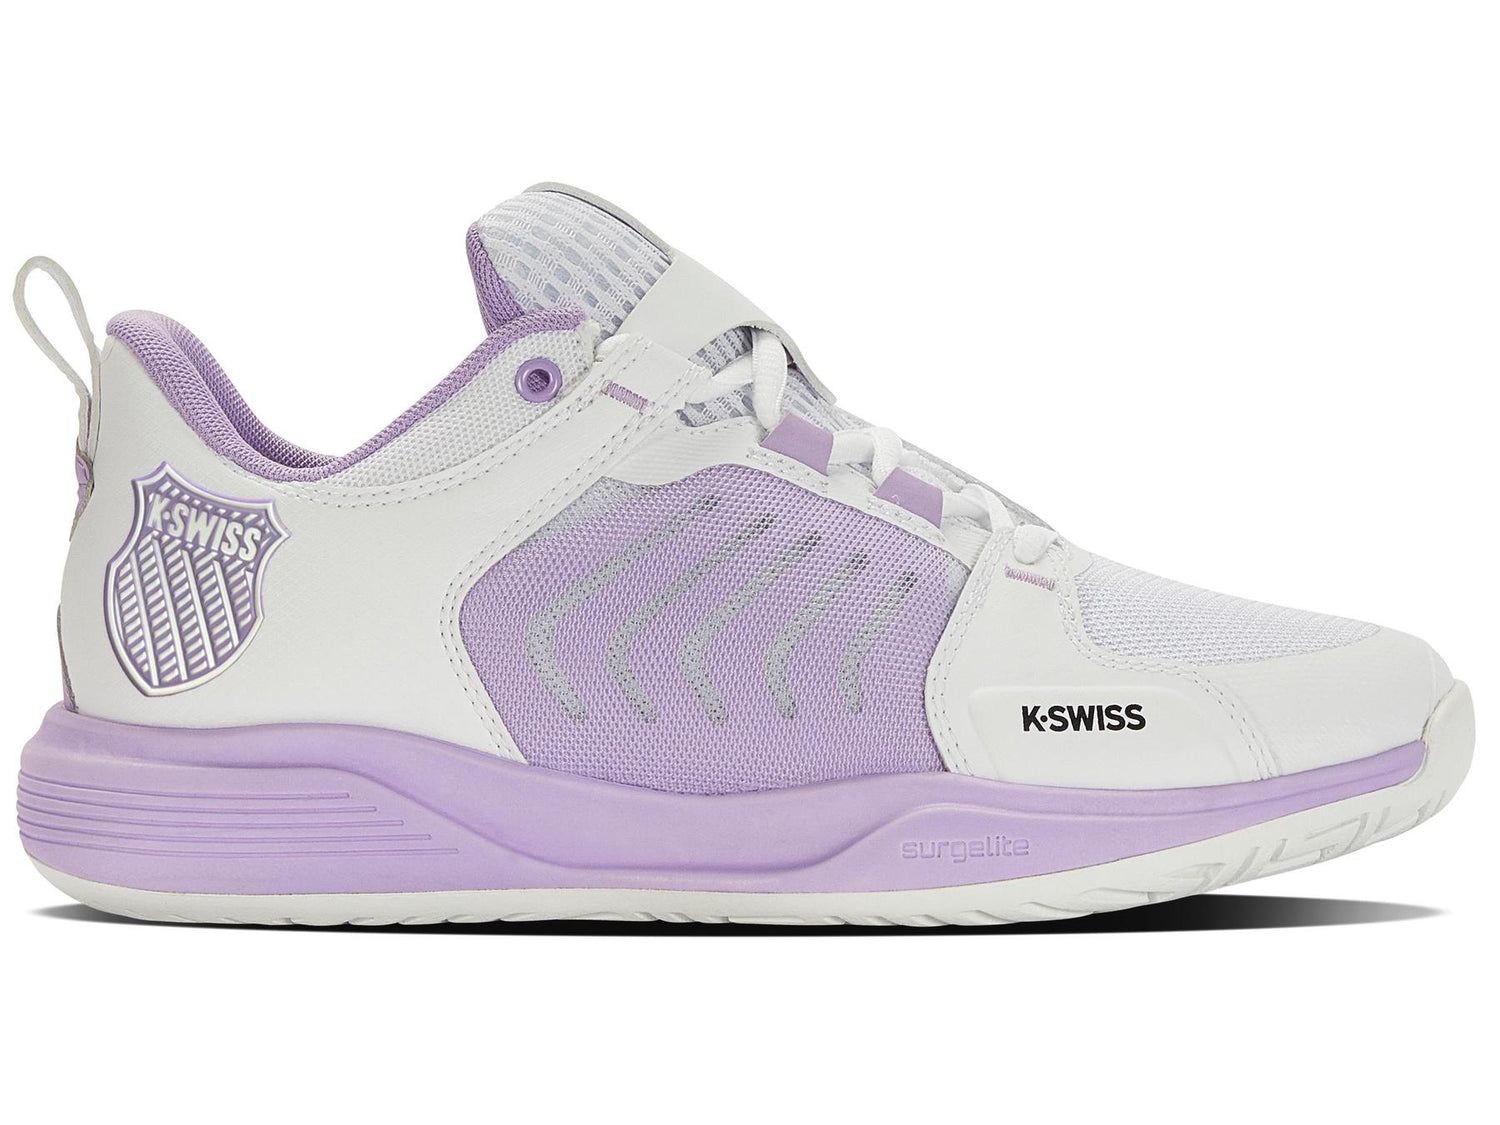 K-Swiss Women's Ultrashot Team Tennis Shoes in White/Purple Rose /Moonless Night